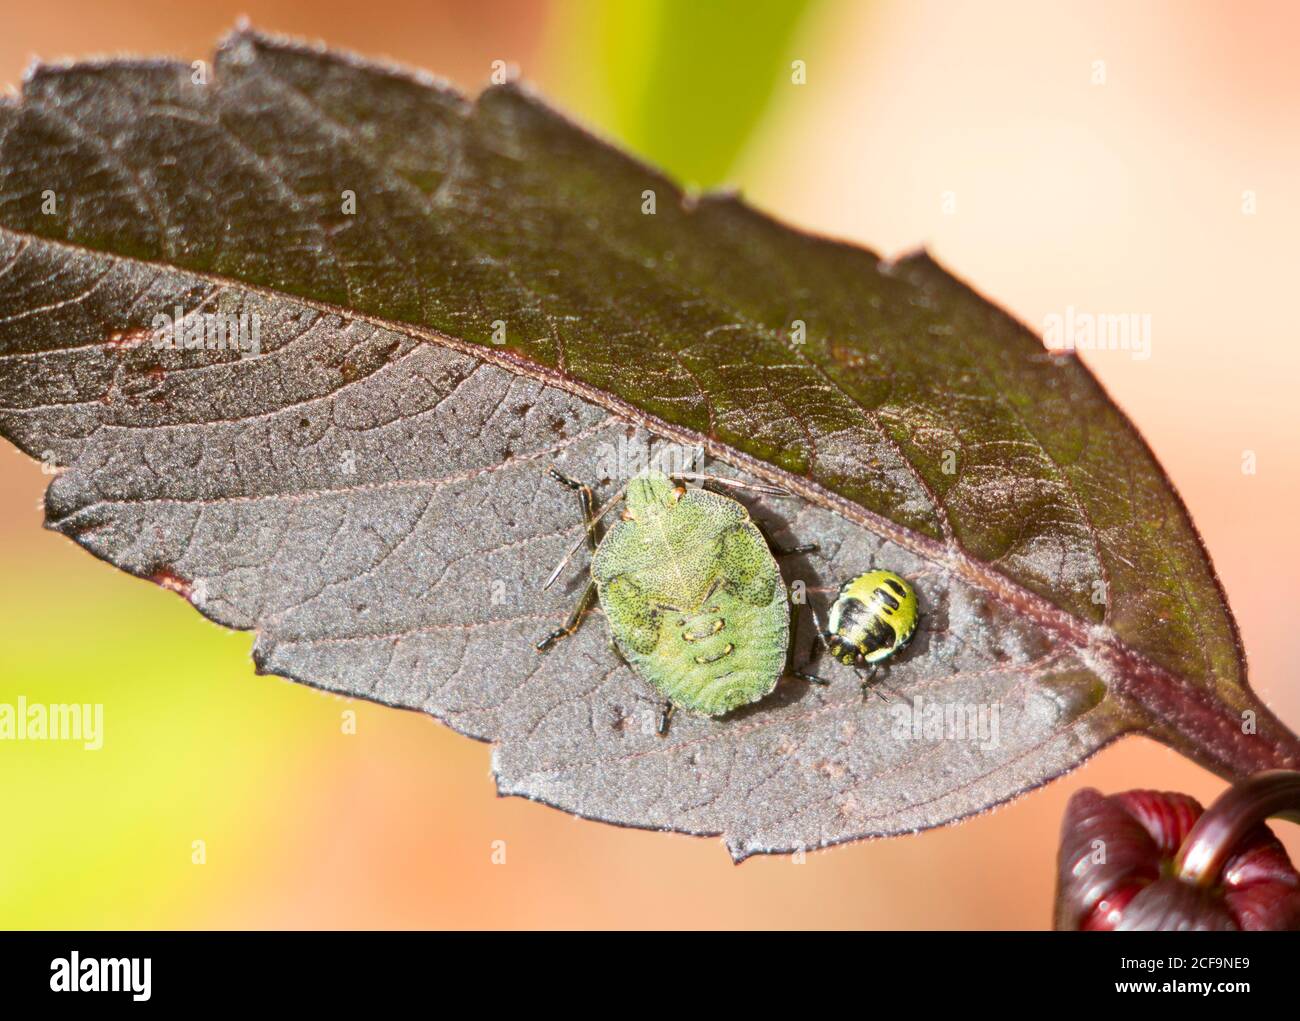 Two stages of the development of Green Shield Bug nymphs  (Palomena prasina) on a dahlia leaf, England, UK Stock Photo